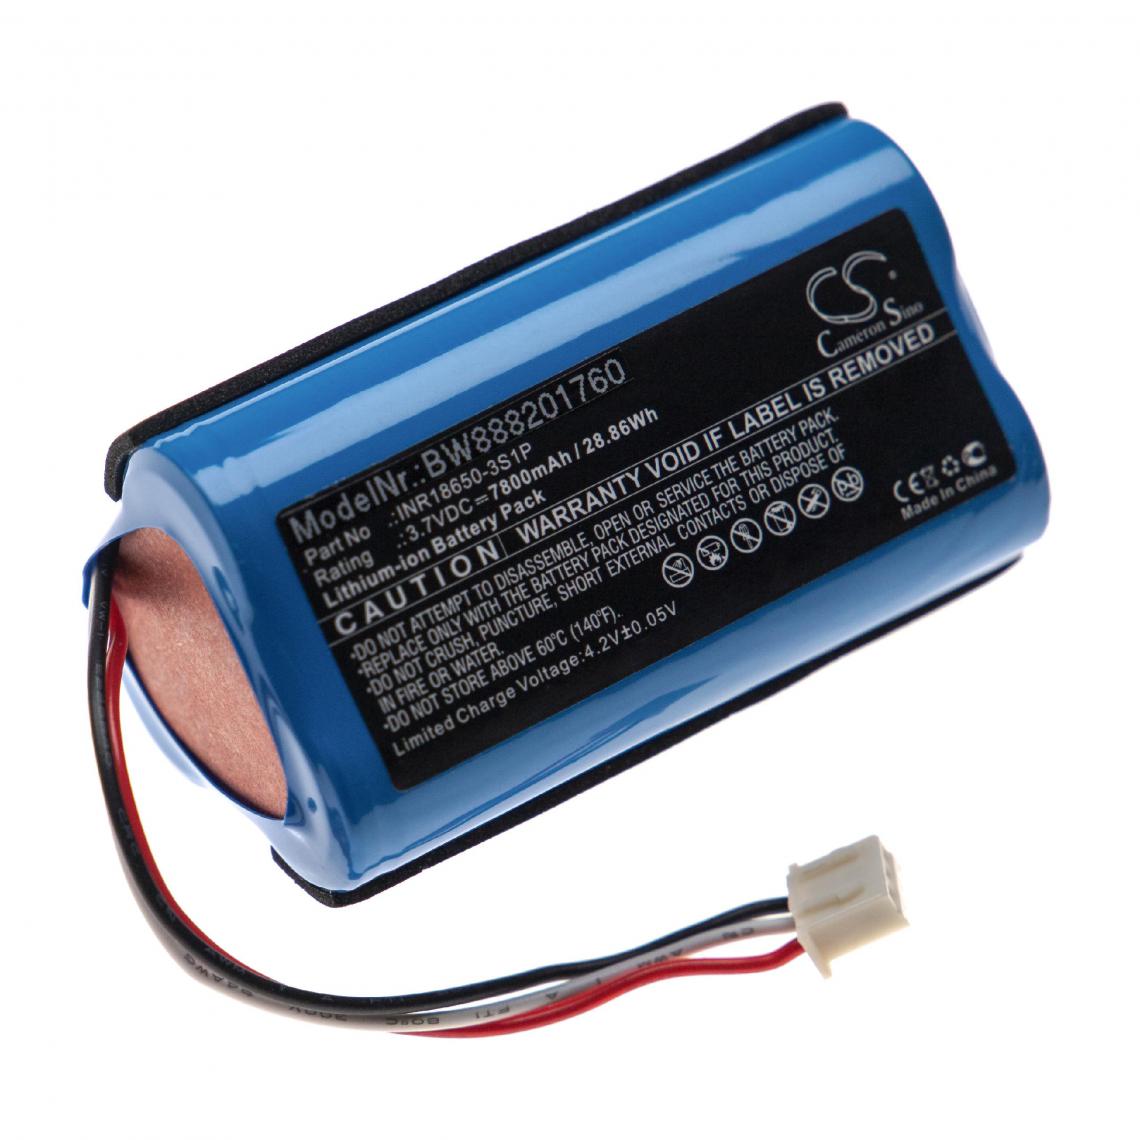 Vhbw - vhbw batterie compatible avec Altec Lansing IMW789, IMW789-BLG, LifeJacket, LifeJacket XL haut-parleurs, enceintes (7800mAh, 3,7V, Li-ion) - Batteries électroniques